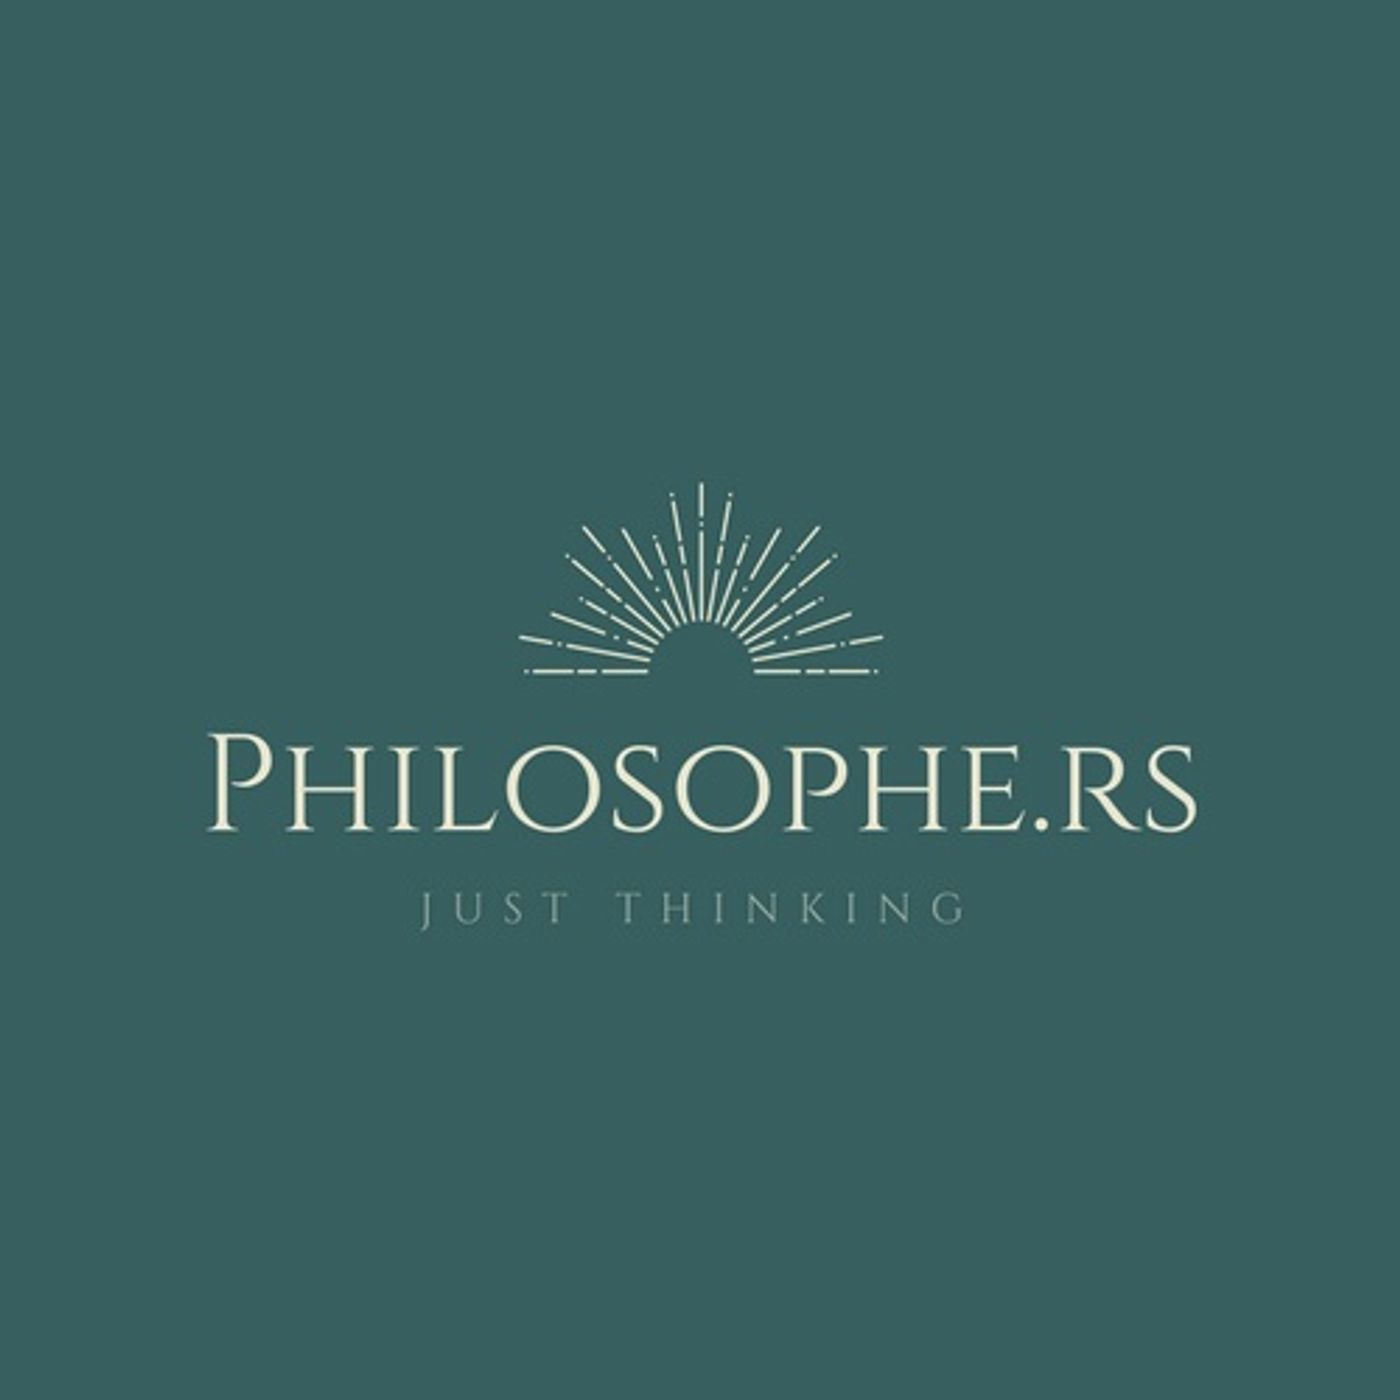 Philosophe.rs: Just Thinking